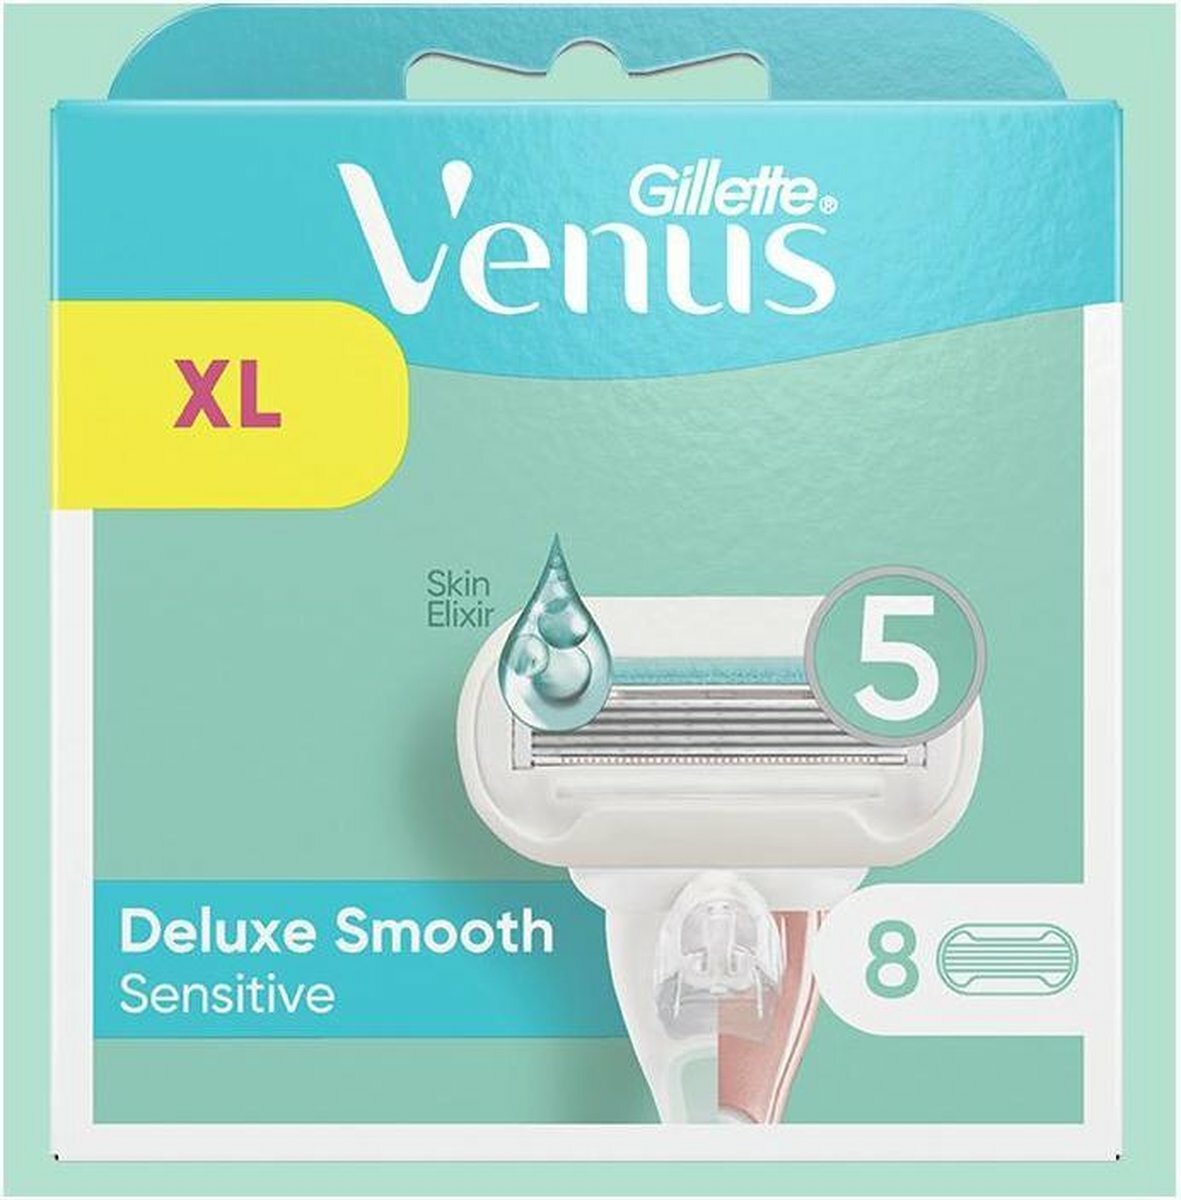 Сменные кассеты Gillette Venus Deluxe Smooth Sensitive Embrace, 8 шт gillette сменные кассеты для бритья venus embrace